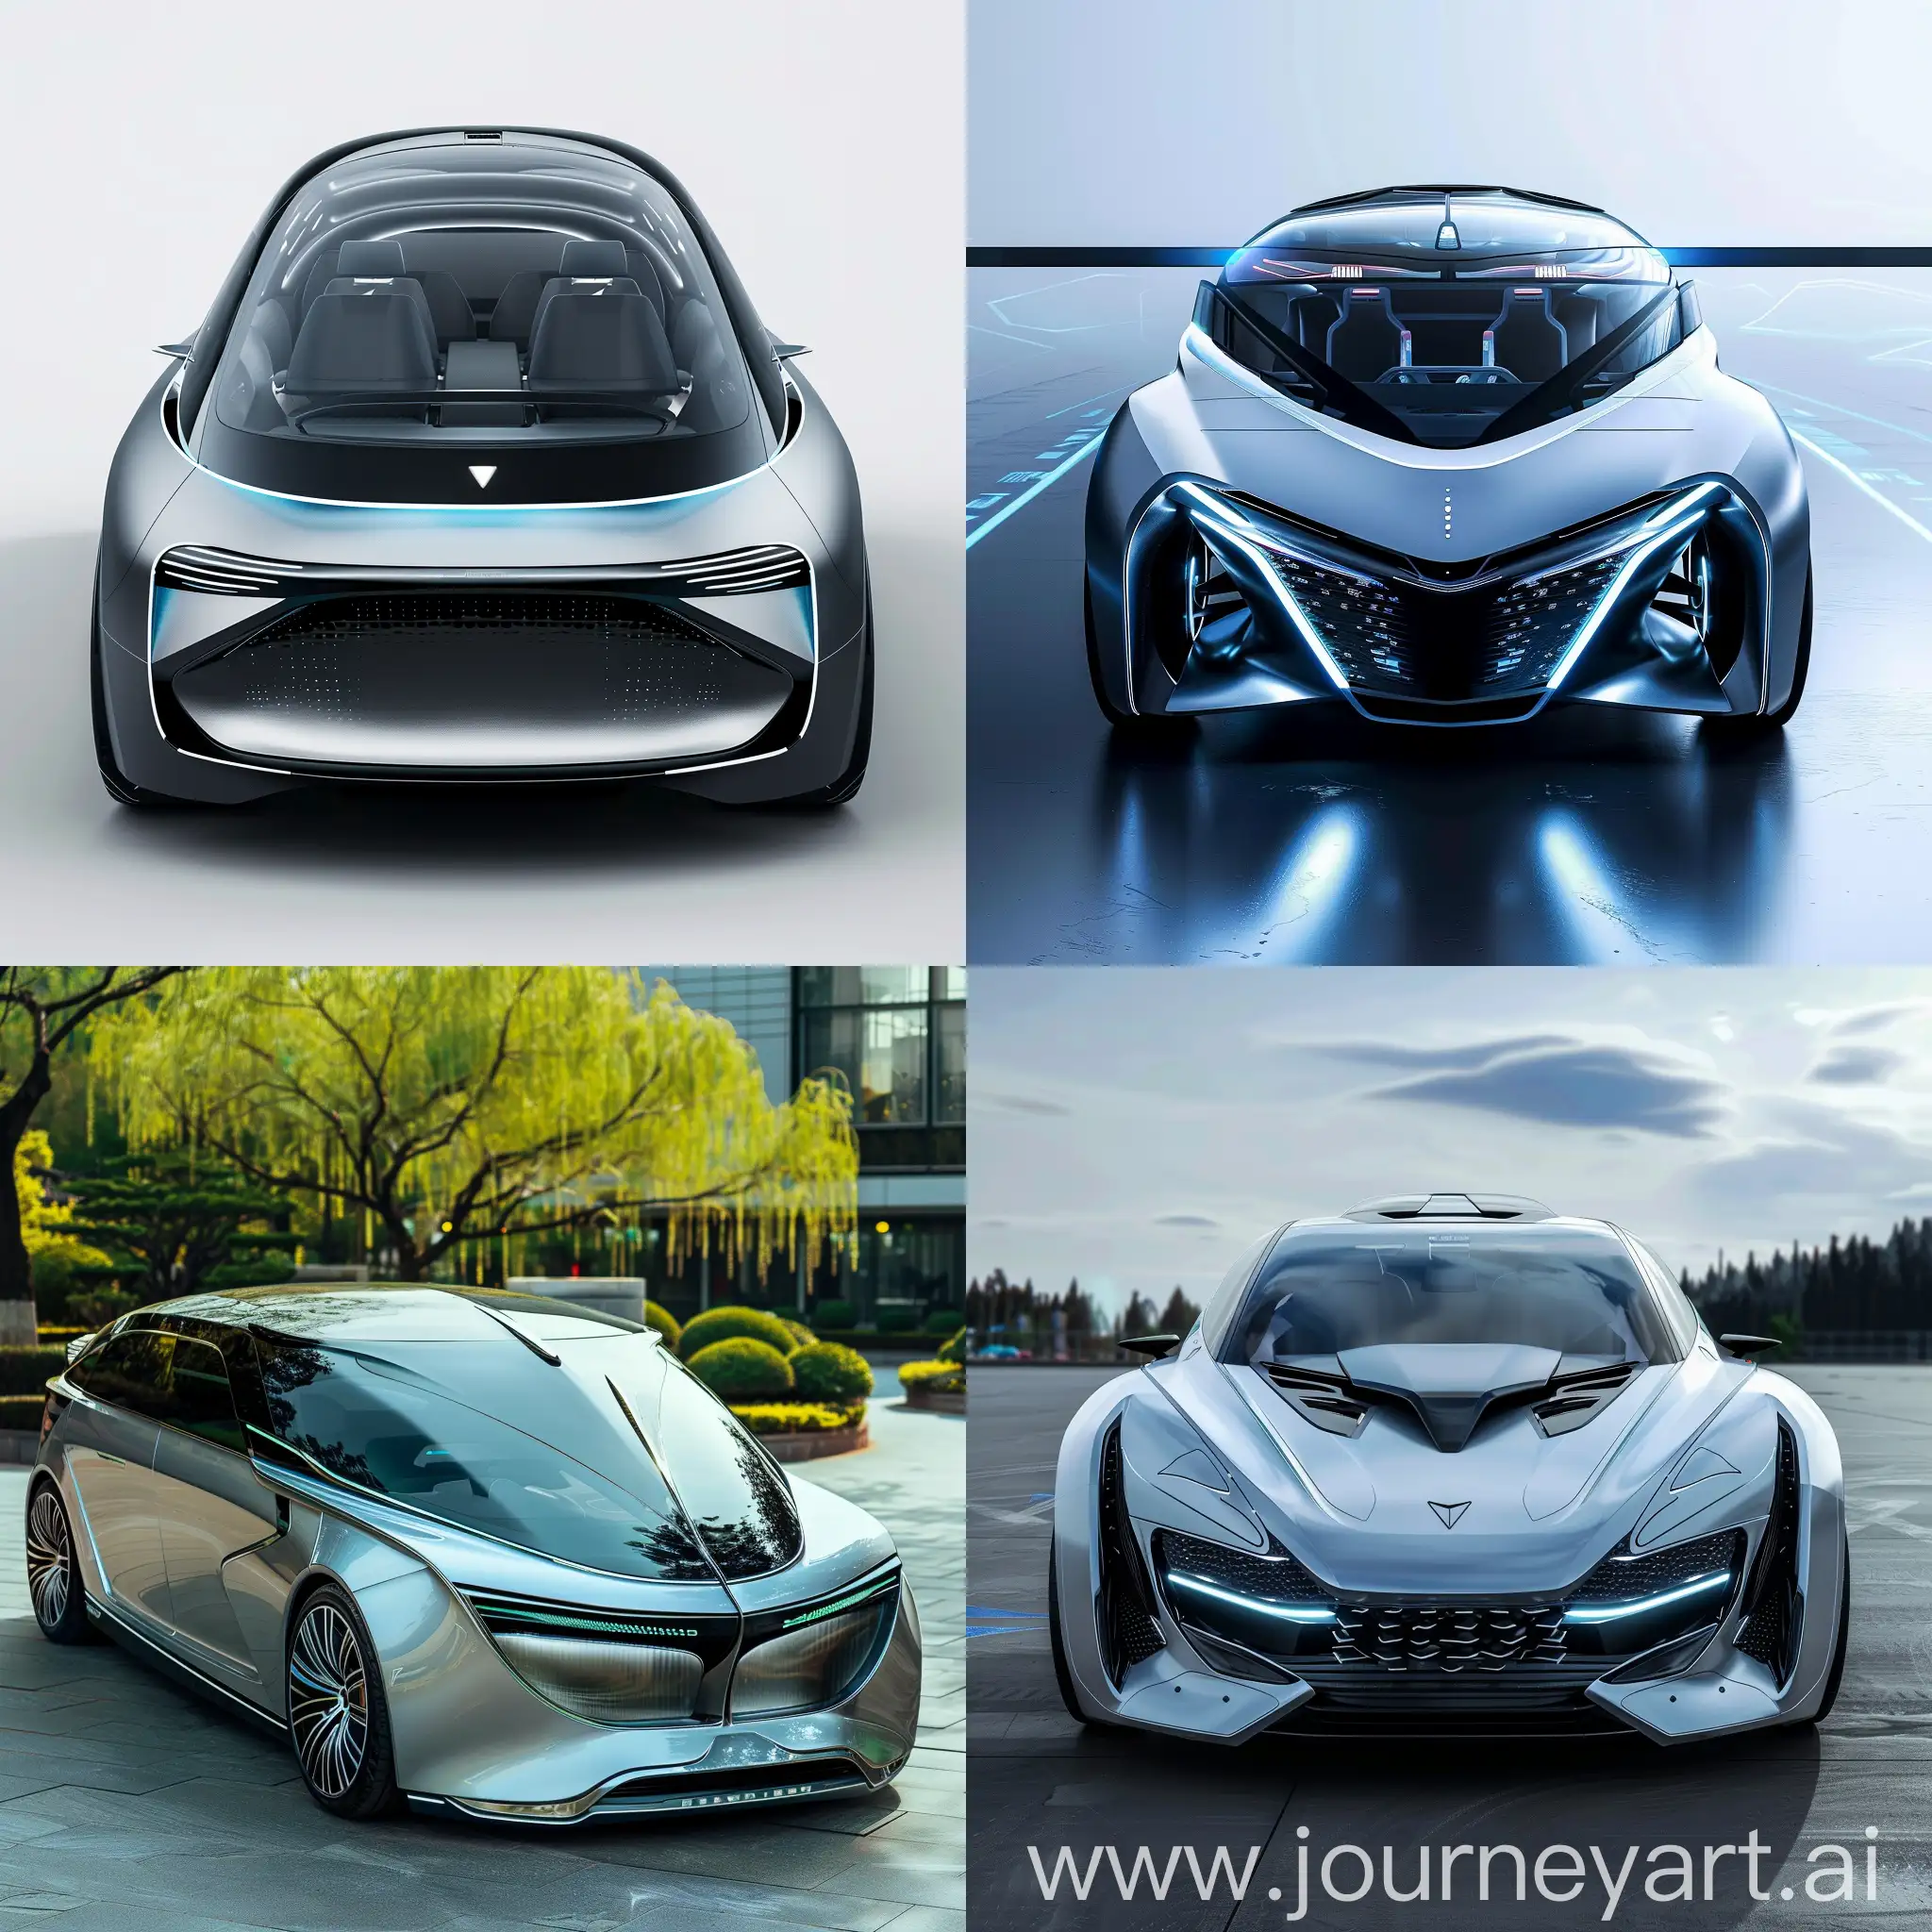 Futuristic-Chinese-Minivan-Design-Modern-and-Aerodynamic-Front-View